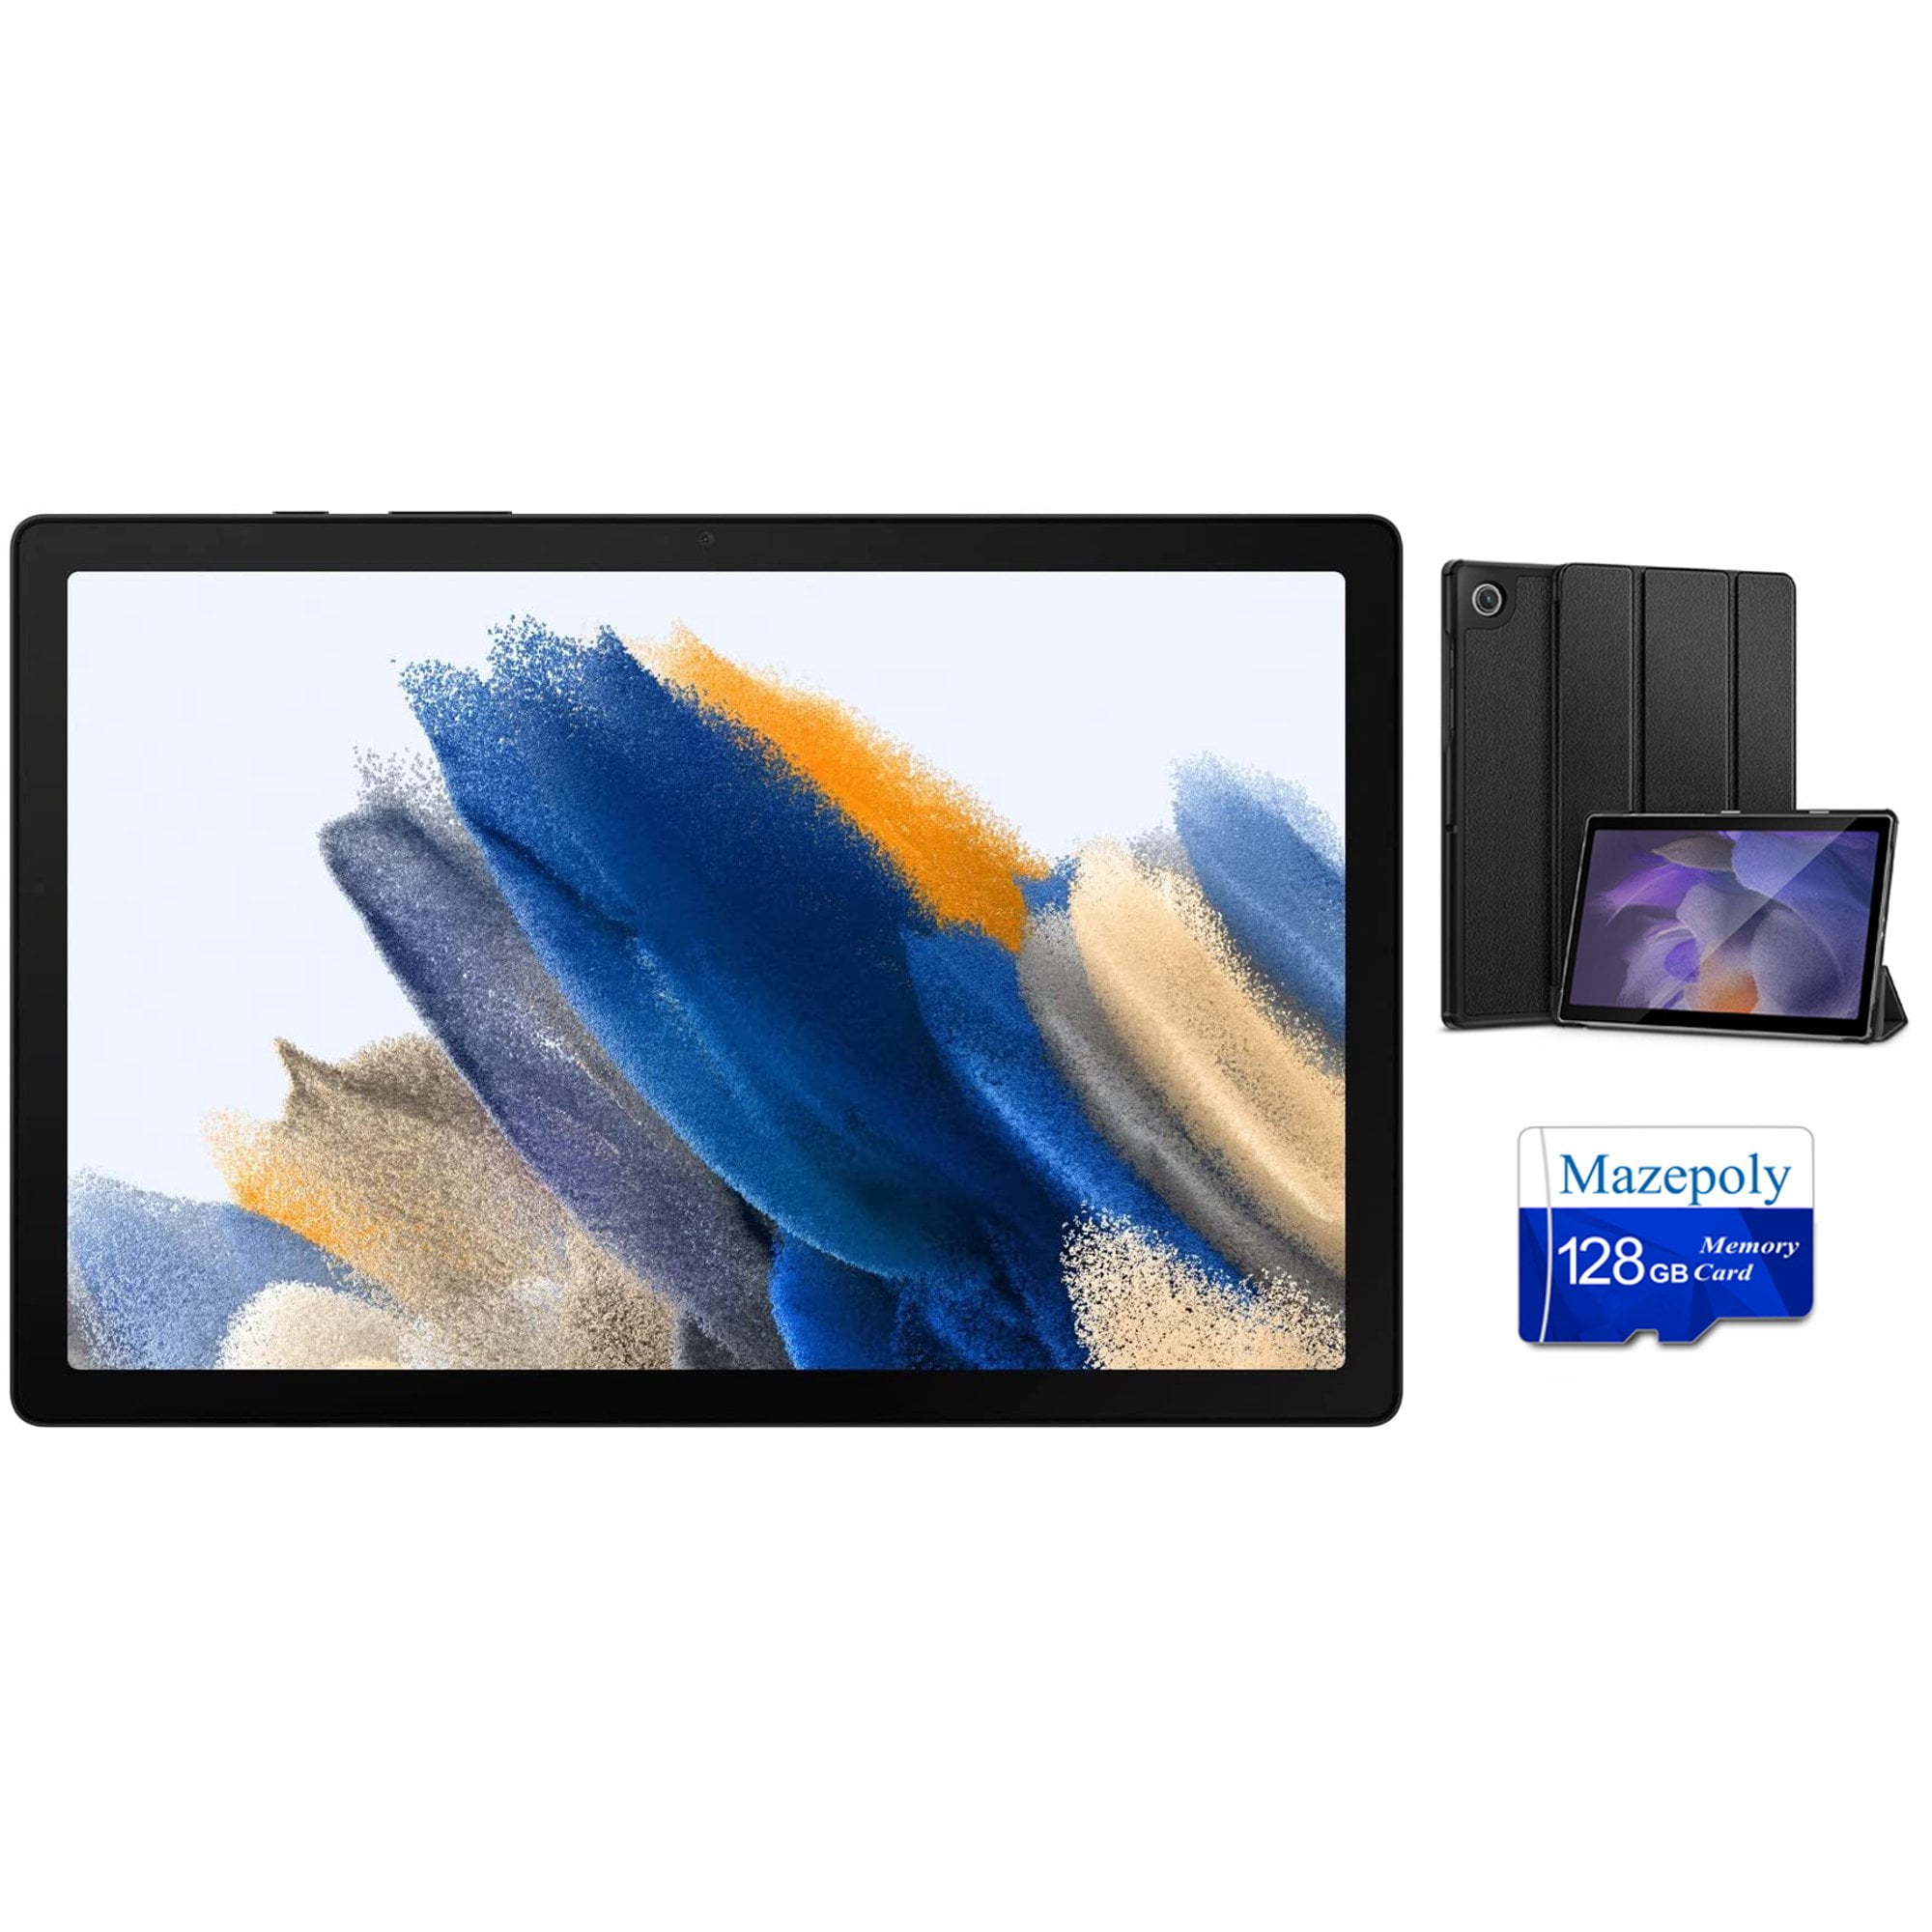 Galaxy Tab S2 9.7 32GB (Verizon) Tablets - SM-T817VZWAVZW